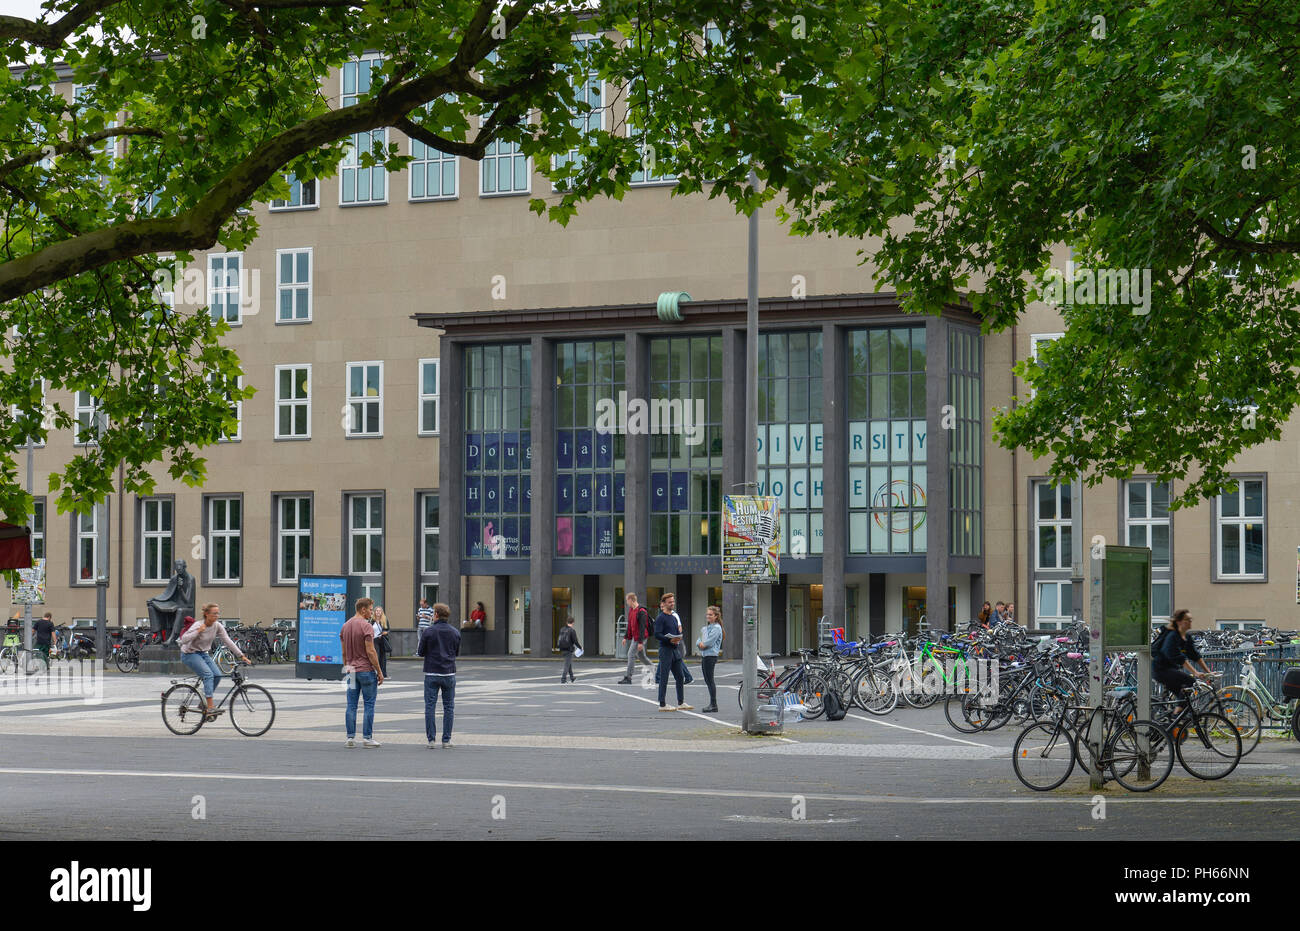 Universitaet zu Koeln, Hauptgebaeude, Albertus-Magnus-Platz, Lindenthal, Koeln, Nordrhein-Westfalen, Deutschland Foto Stock